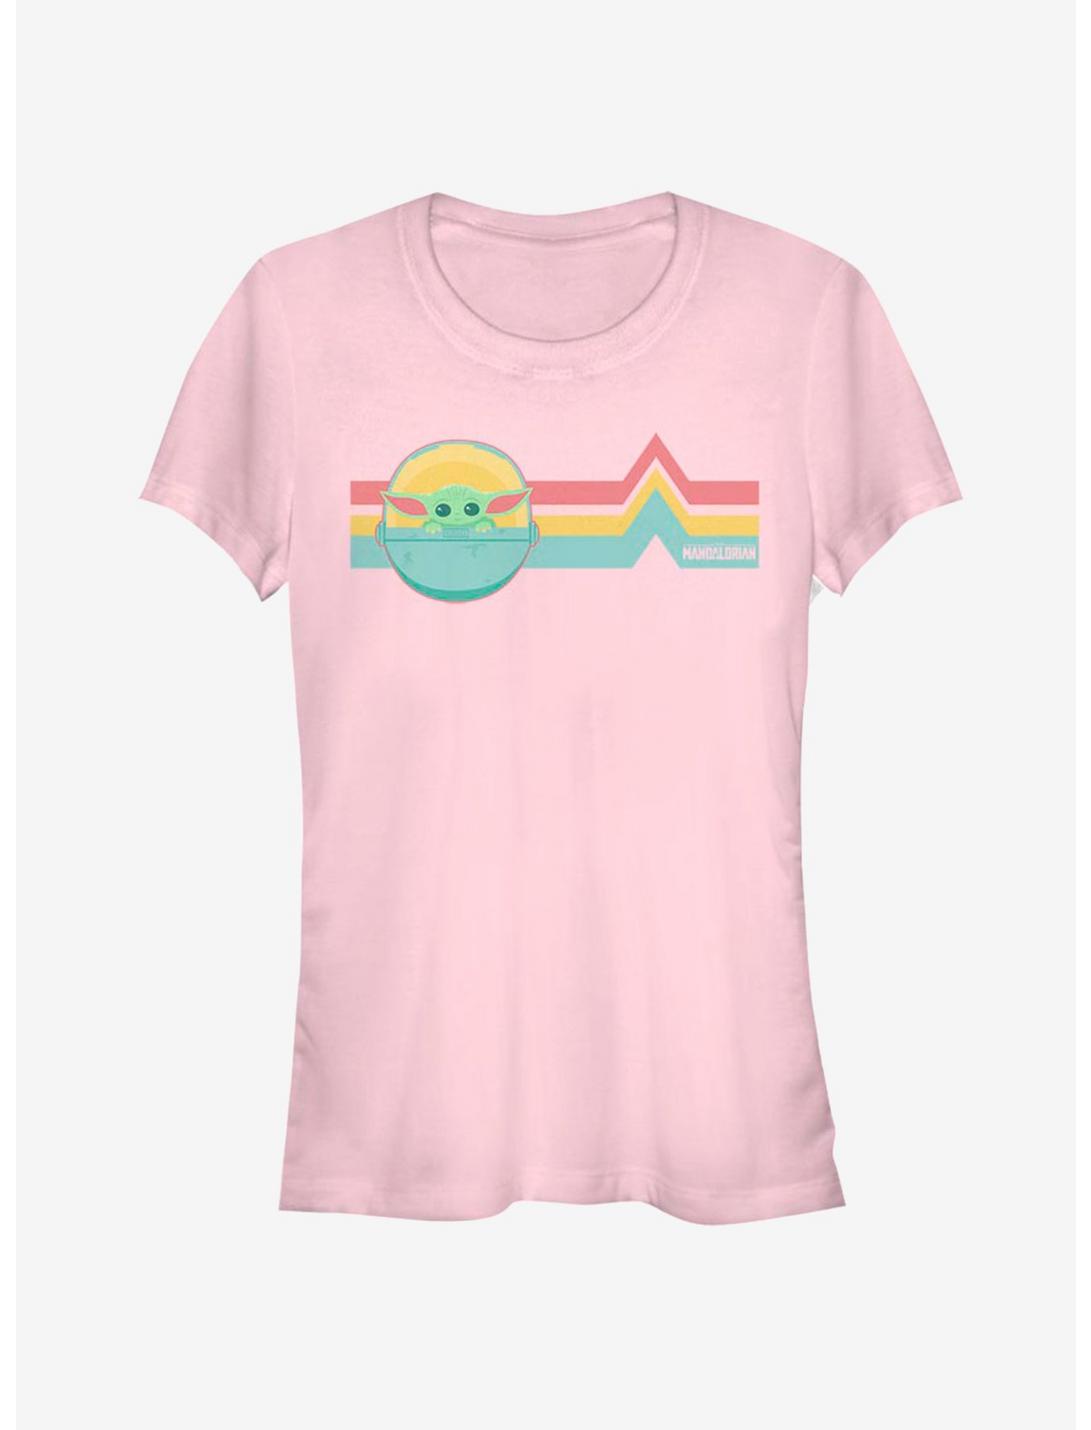 Star Wars The Mandalorian Rainbow Child Girls T-Shirt, LIGHT PINK, hi-res